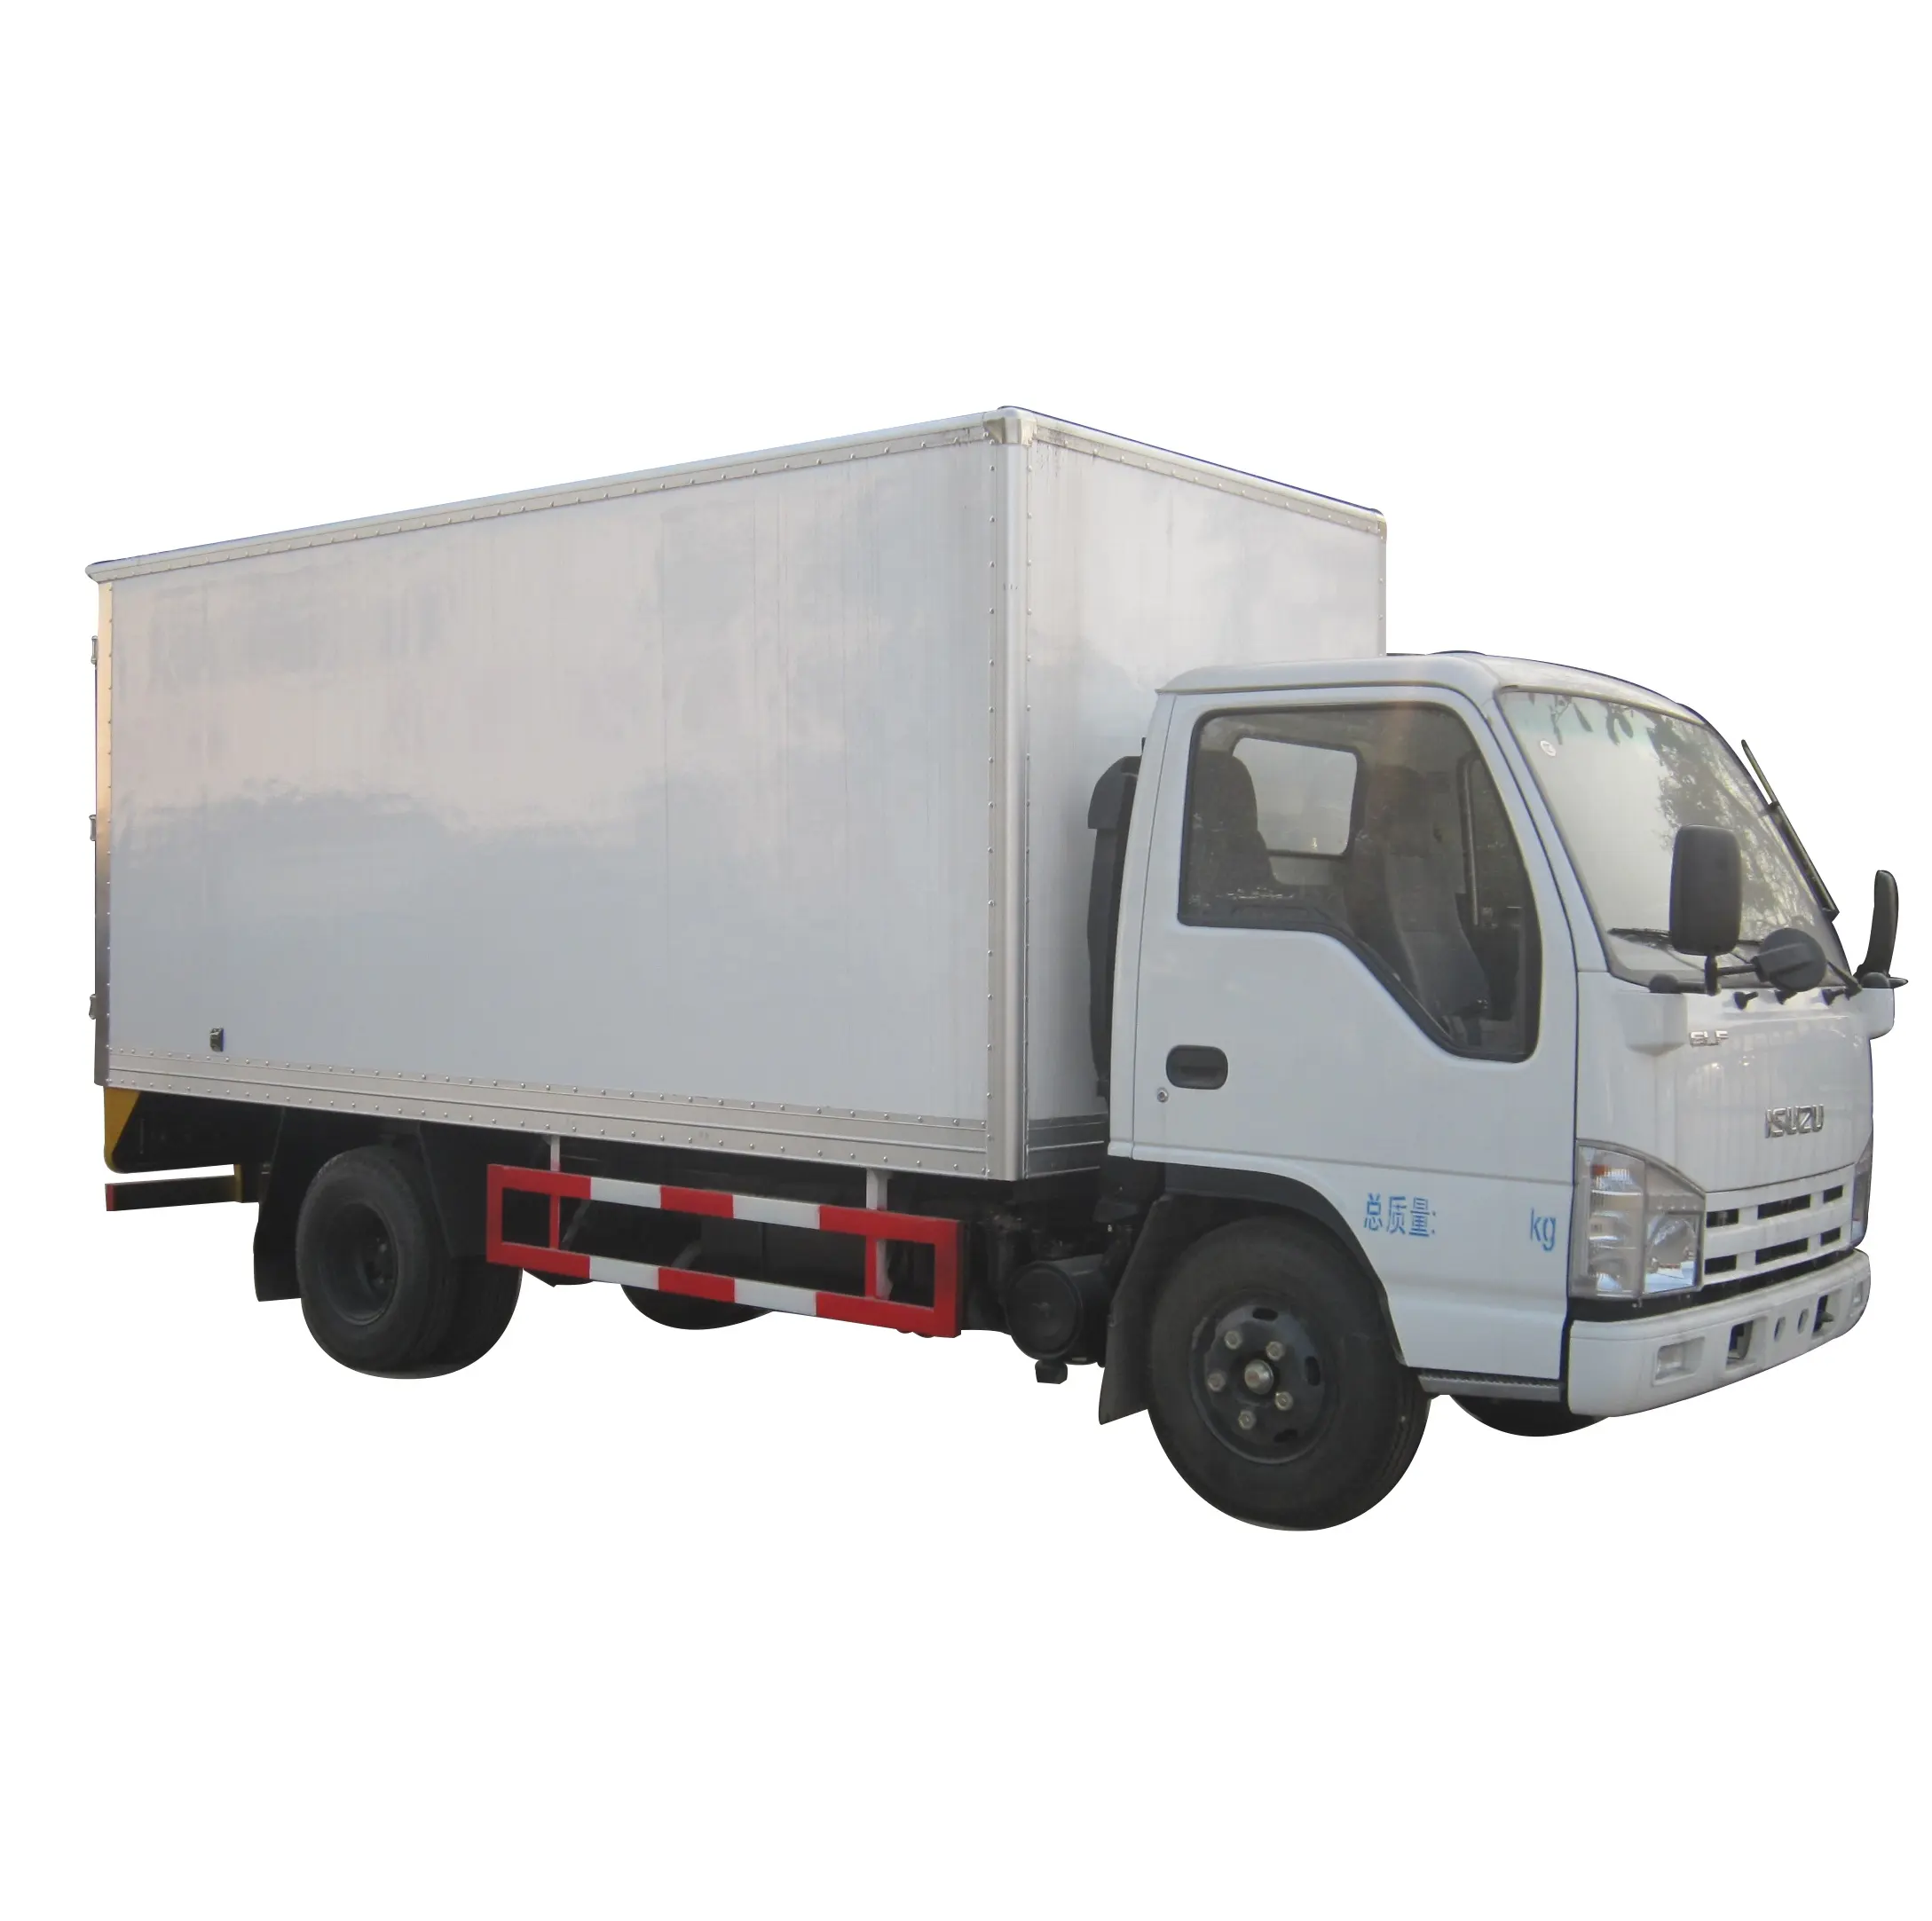 I-SUZ-U 3 טון 5 טון מיני משאיות למכירה עם ואן תיבת דיזל סוג 6 גלגלי משלוח משאית עם סגור משאית תיבה